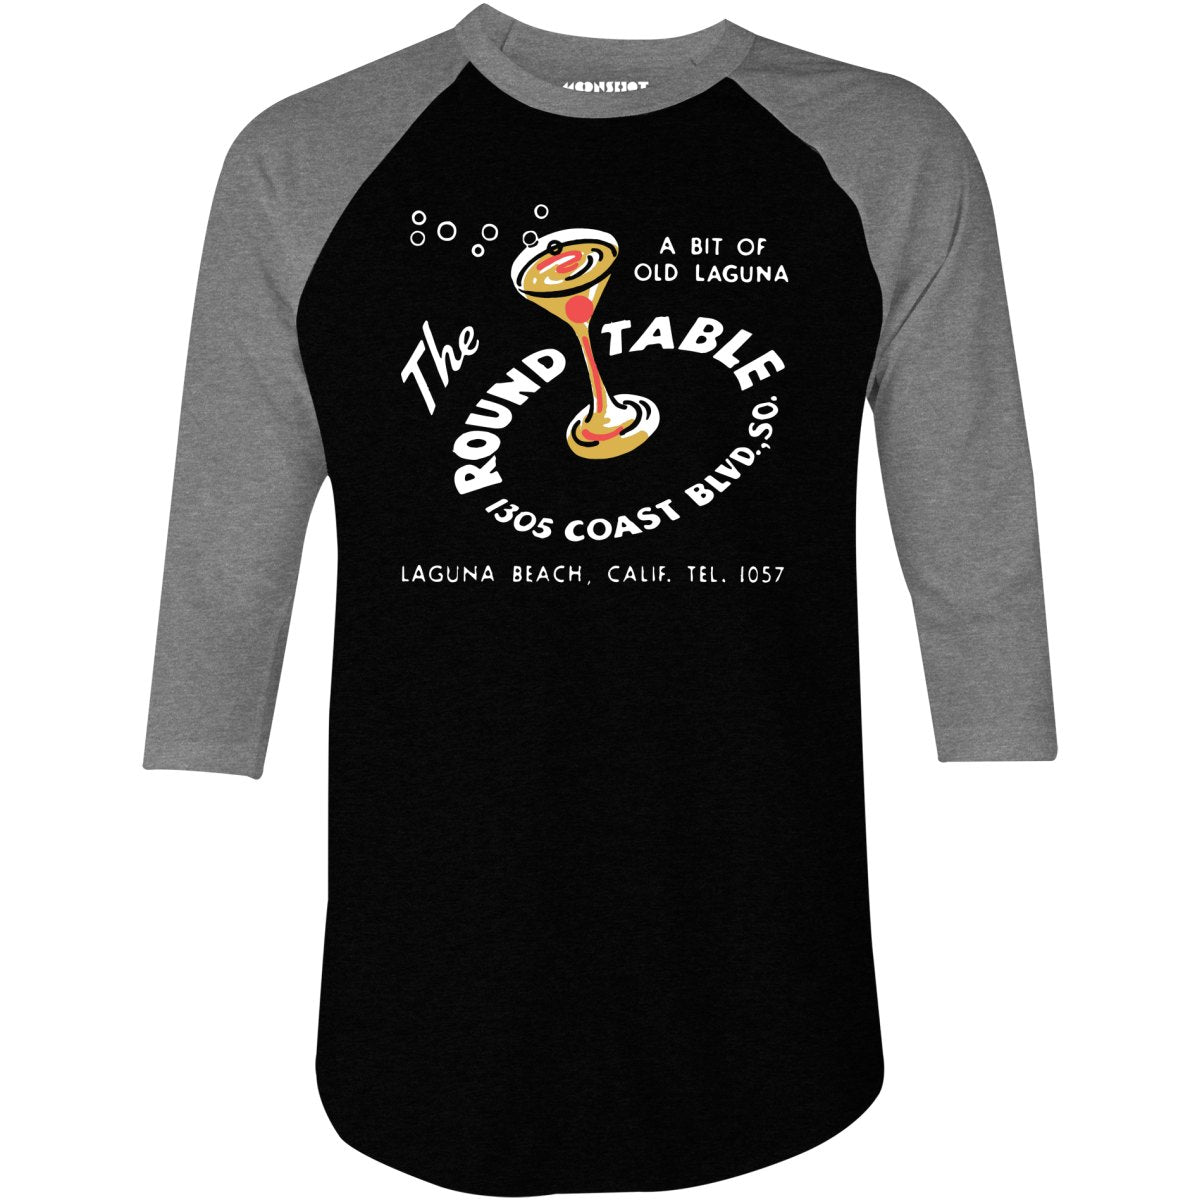 The Round Table - Laguna Beach, CA - Vintage Restaurant - 3/4 Sleeve Raglan T-Shirt